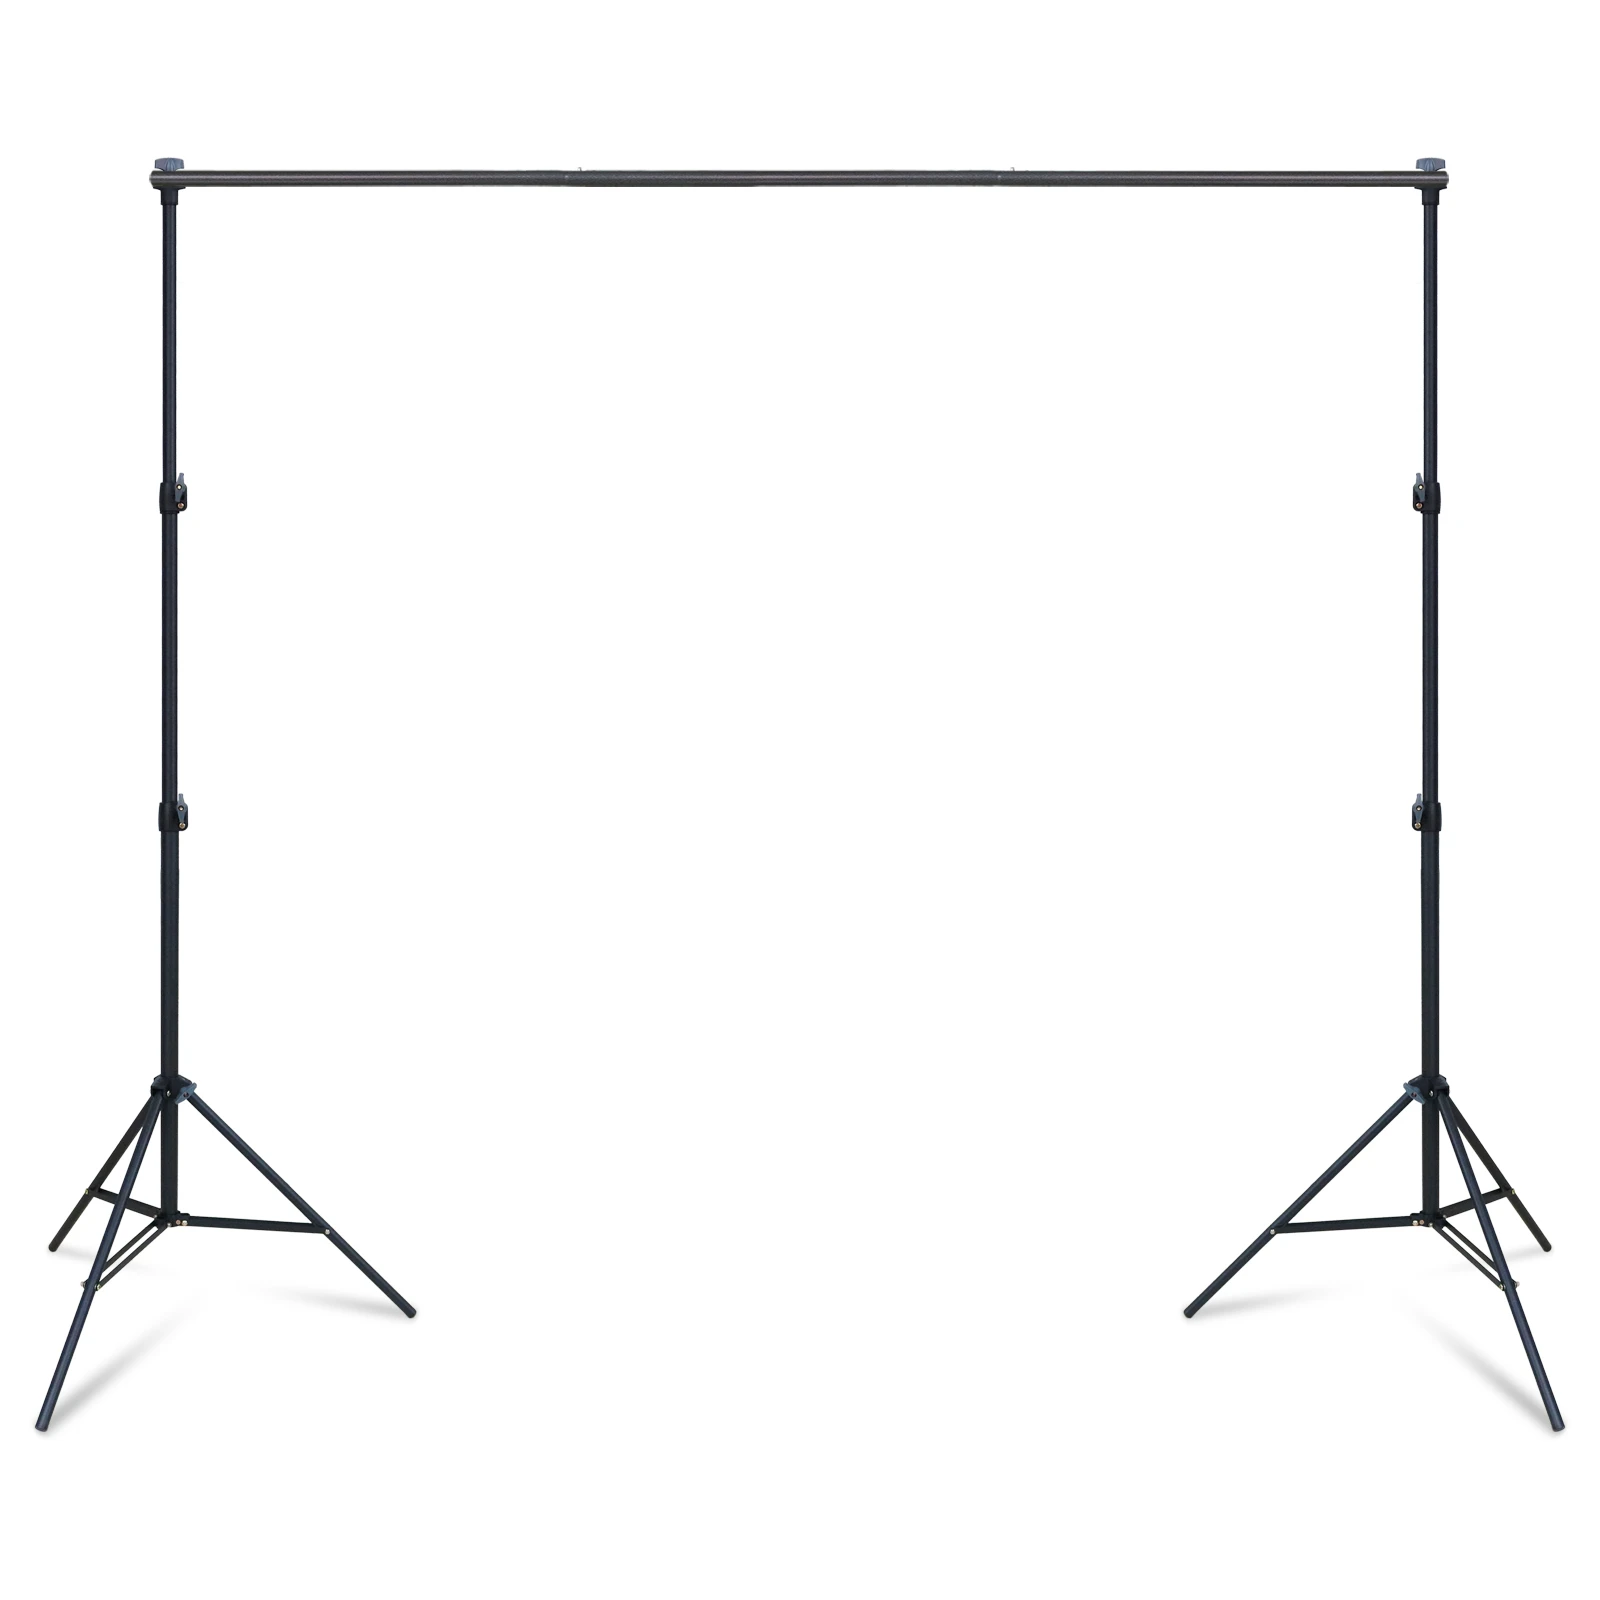 aluminum alloy frame photo system bracket crossbar support kit light weight adjustable studio backdrop balloon stand photography